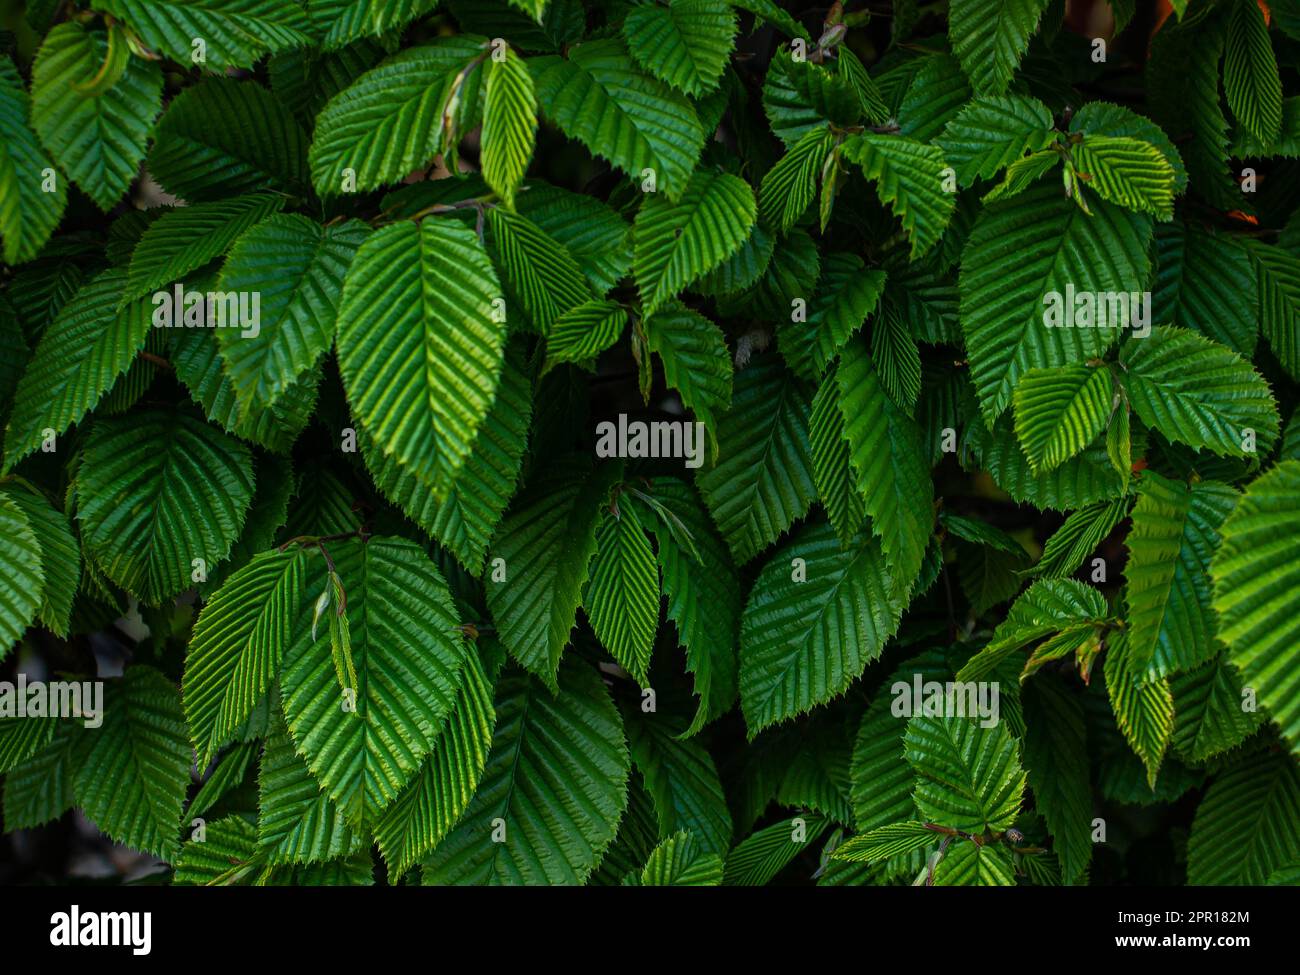 Selective focus of Ulmus pumila celer leaves, European hornbeam or carpinus betulus in the garden. Green leaf pattern, Nature background. Stock Photo